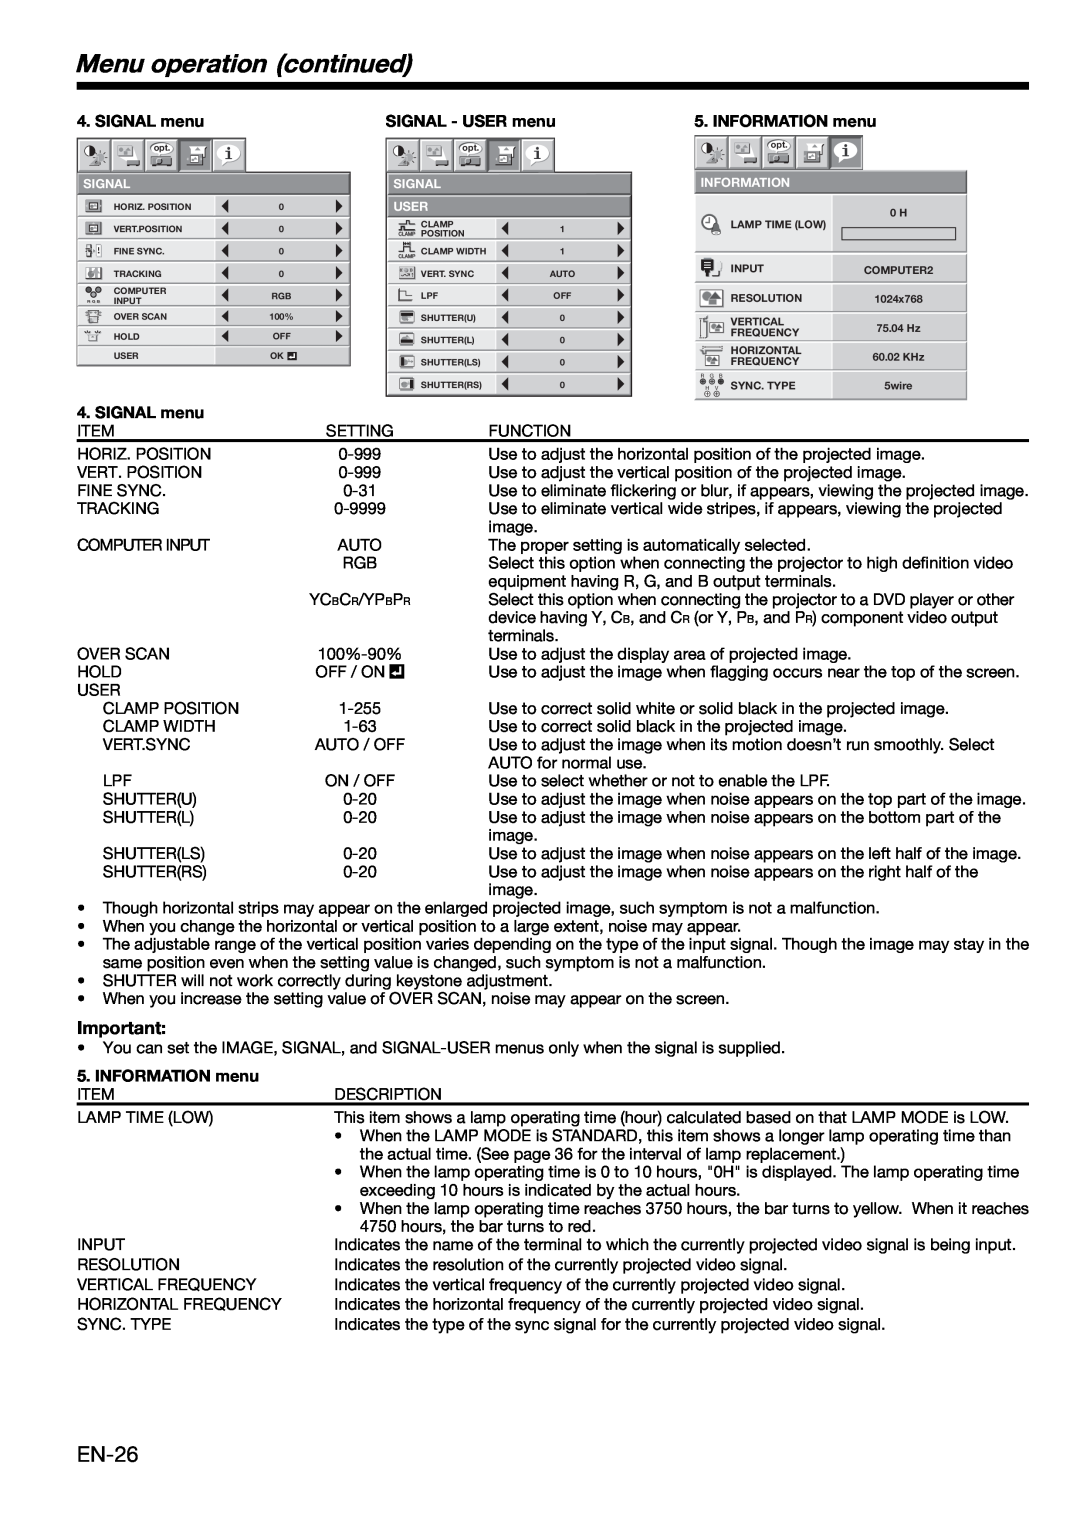 Mitsubishi Electronics XL650U user manual Menu operation continued, SIGNAL menu, SIGNAL - USER menu, INFORMATION menu 